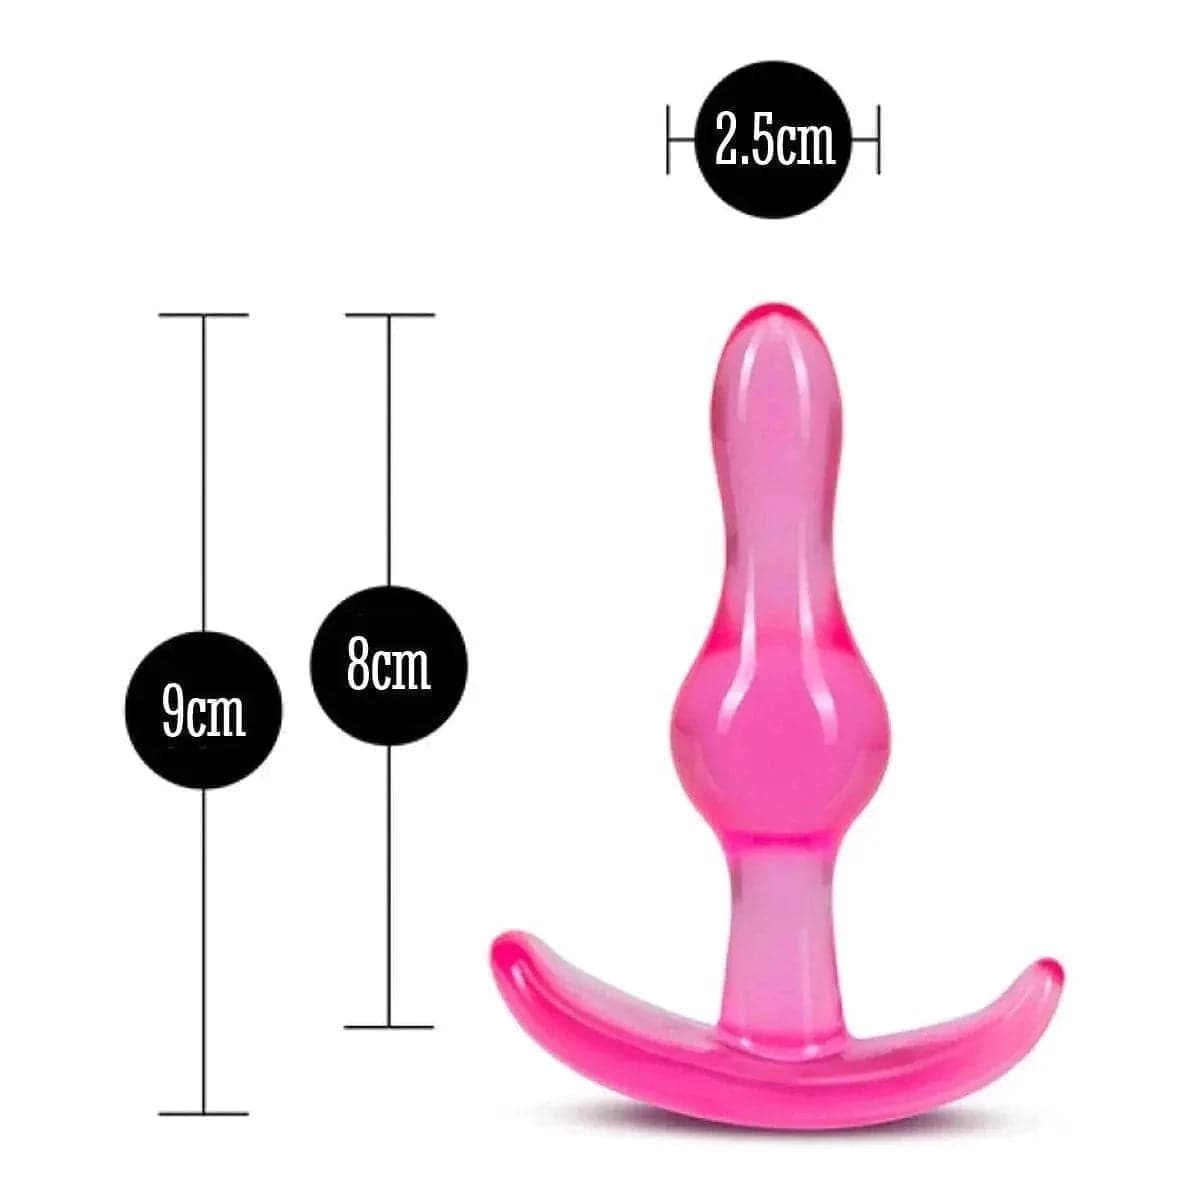 Anal Plug Curvy Rosa, 9cm Ø2.5cm - Pérola SexShop